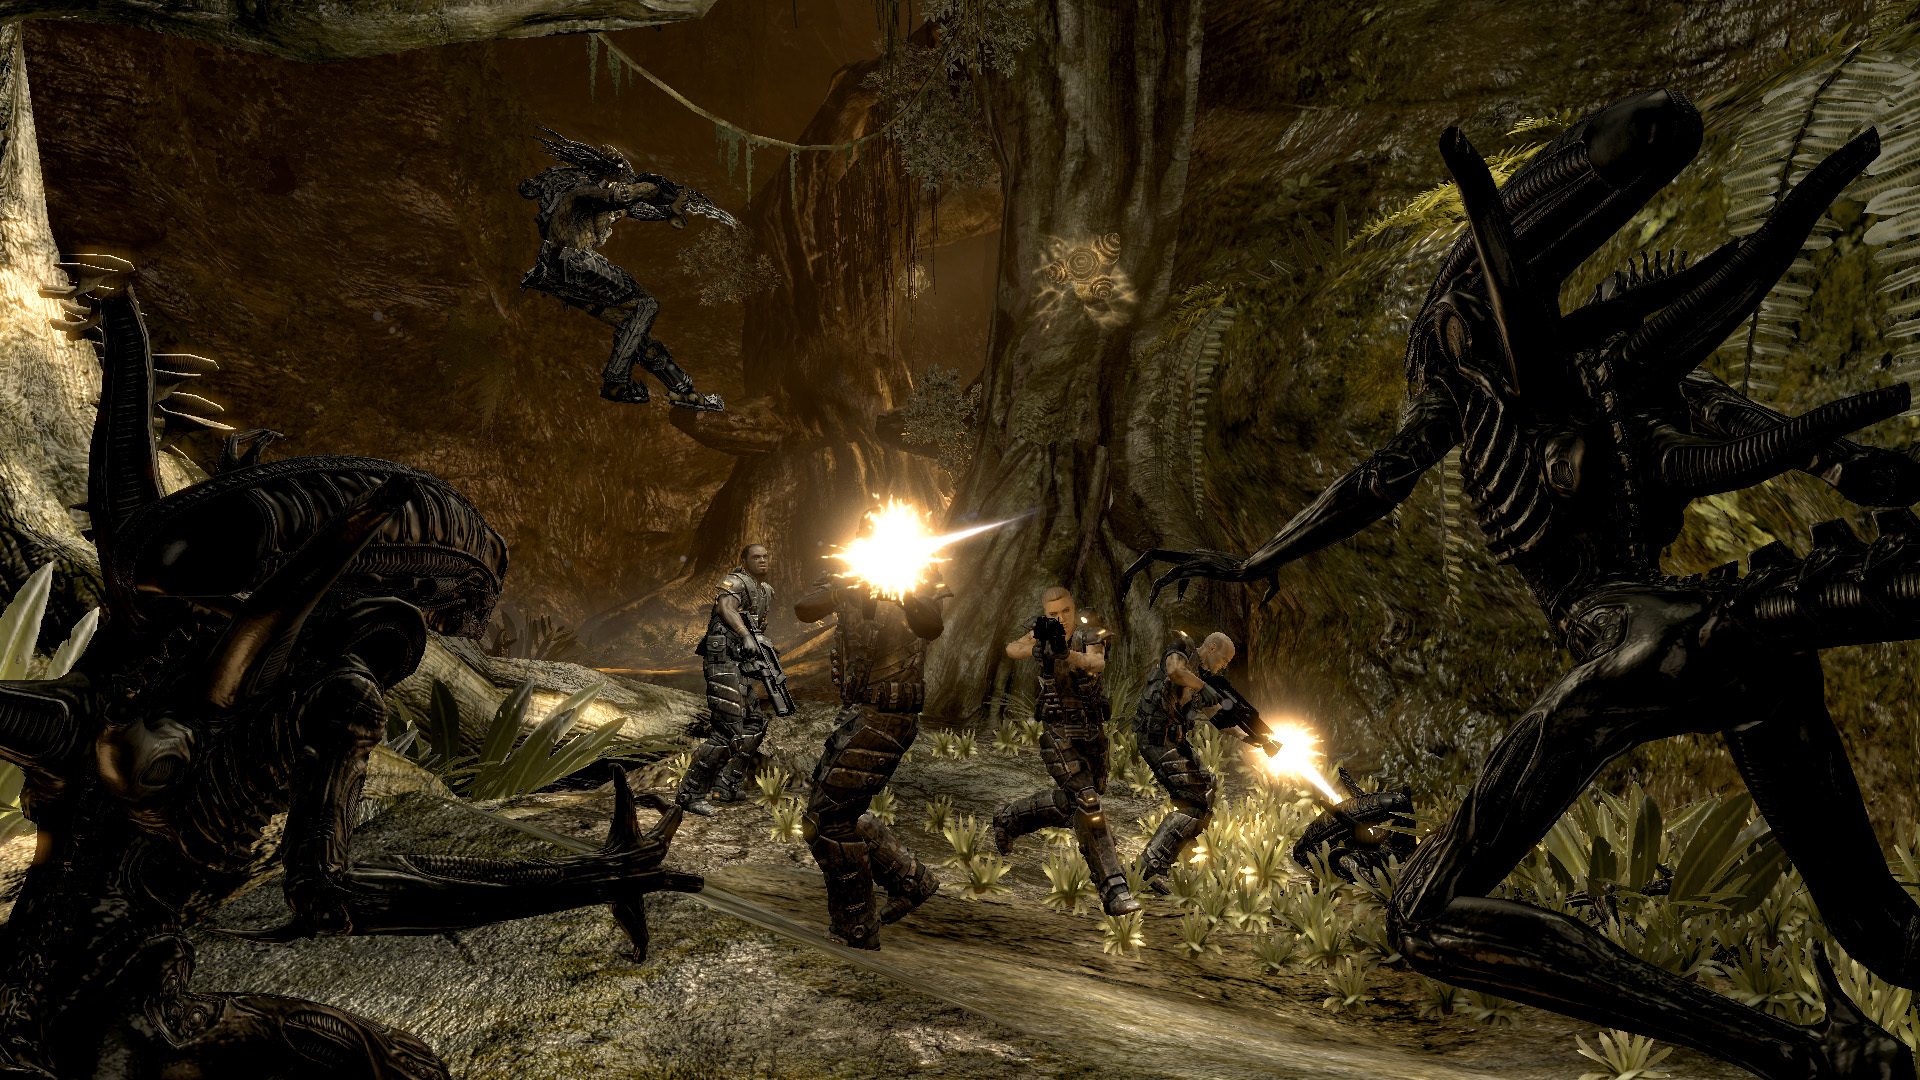 Alien Vs Predator Xbox360  Jogo de Videogame Xbox360 Usado